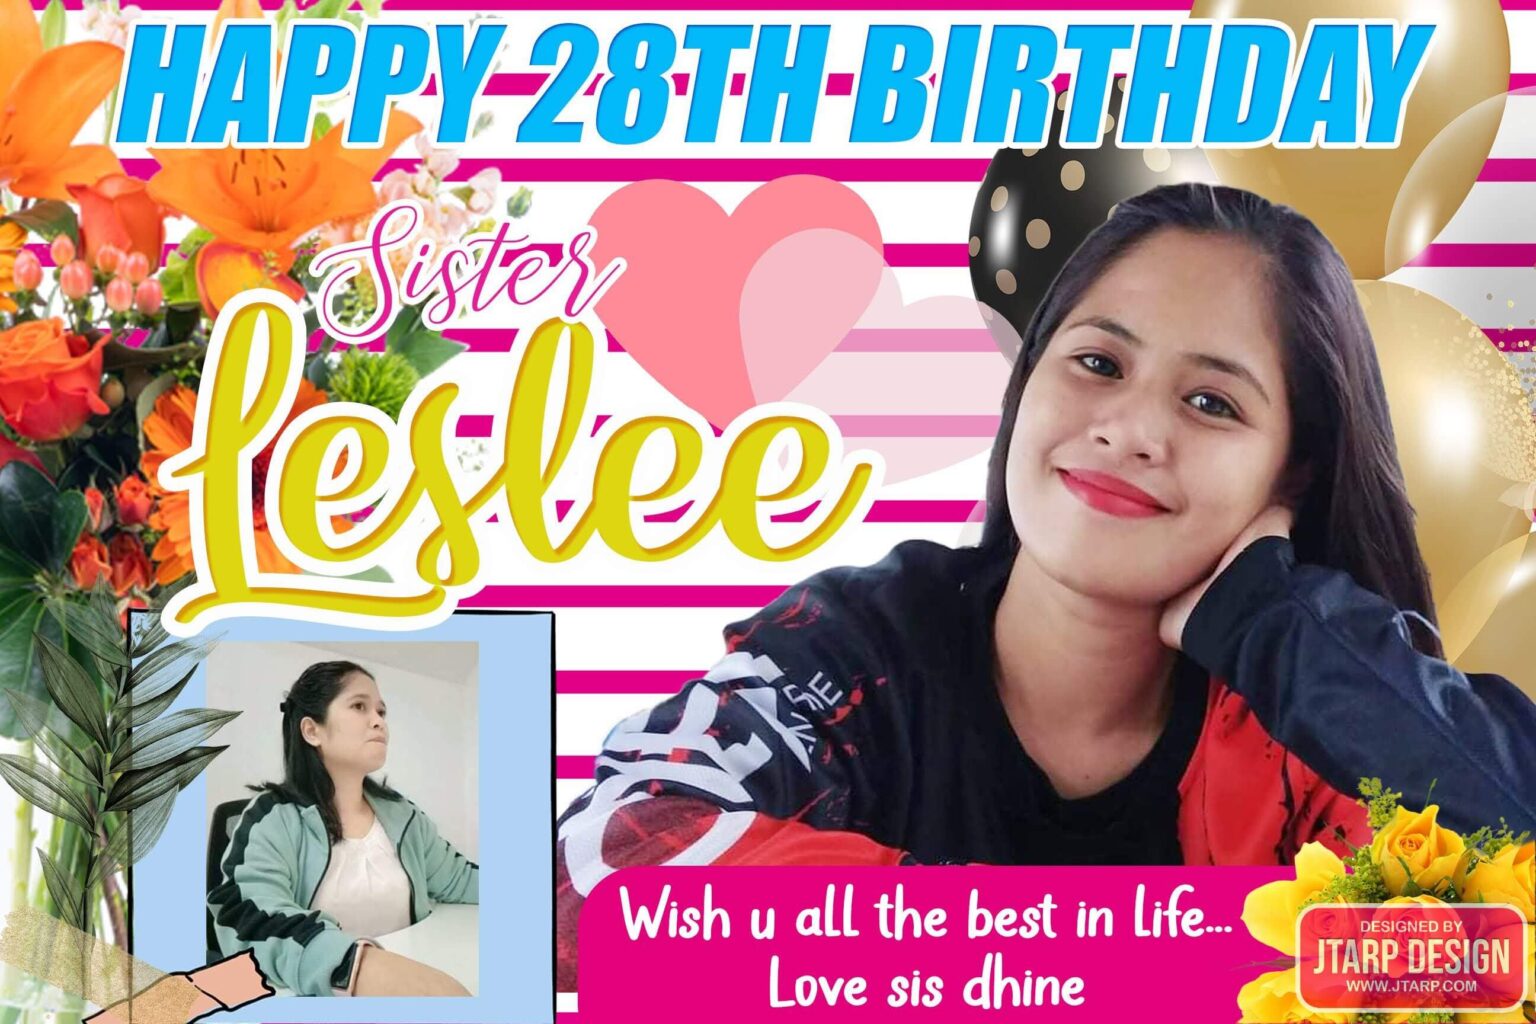 2x3 Happy 28th Birthday Sister Leslee